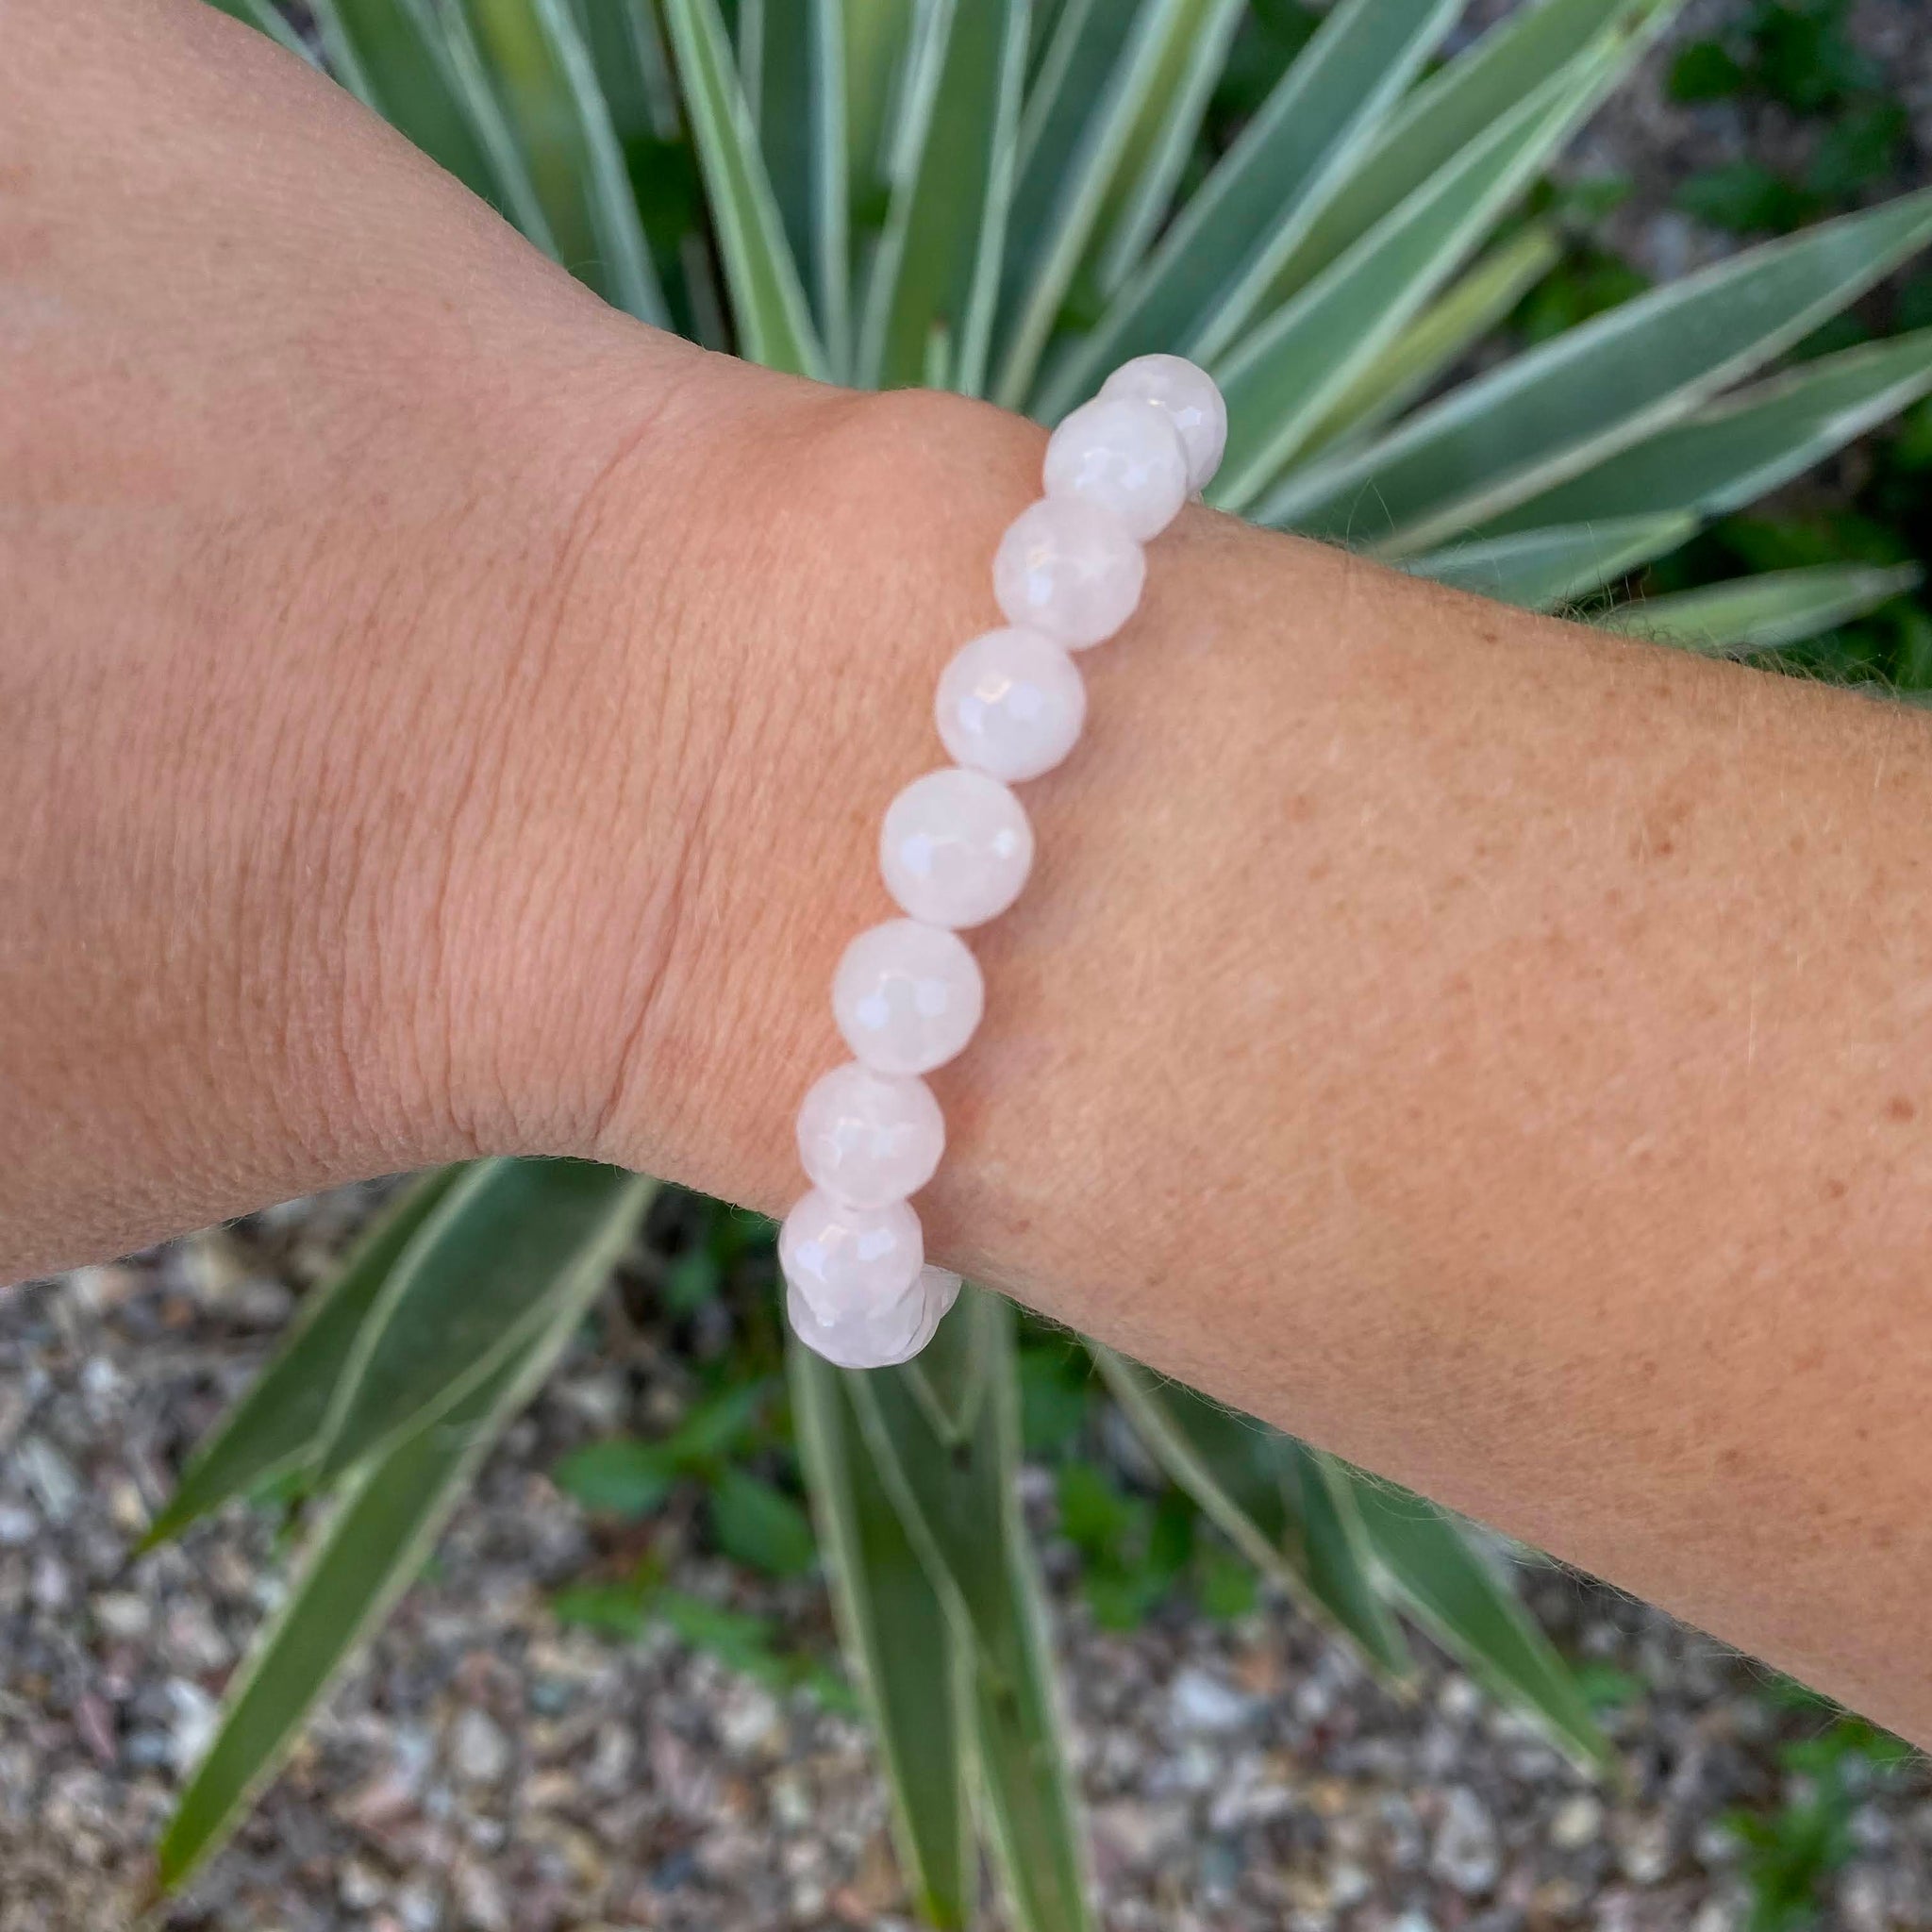 Rose Quartz Bracelet with Aromatherapy Lava Beads - Ultimate Vitality